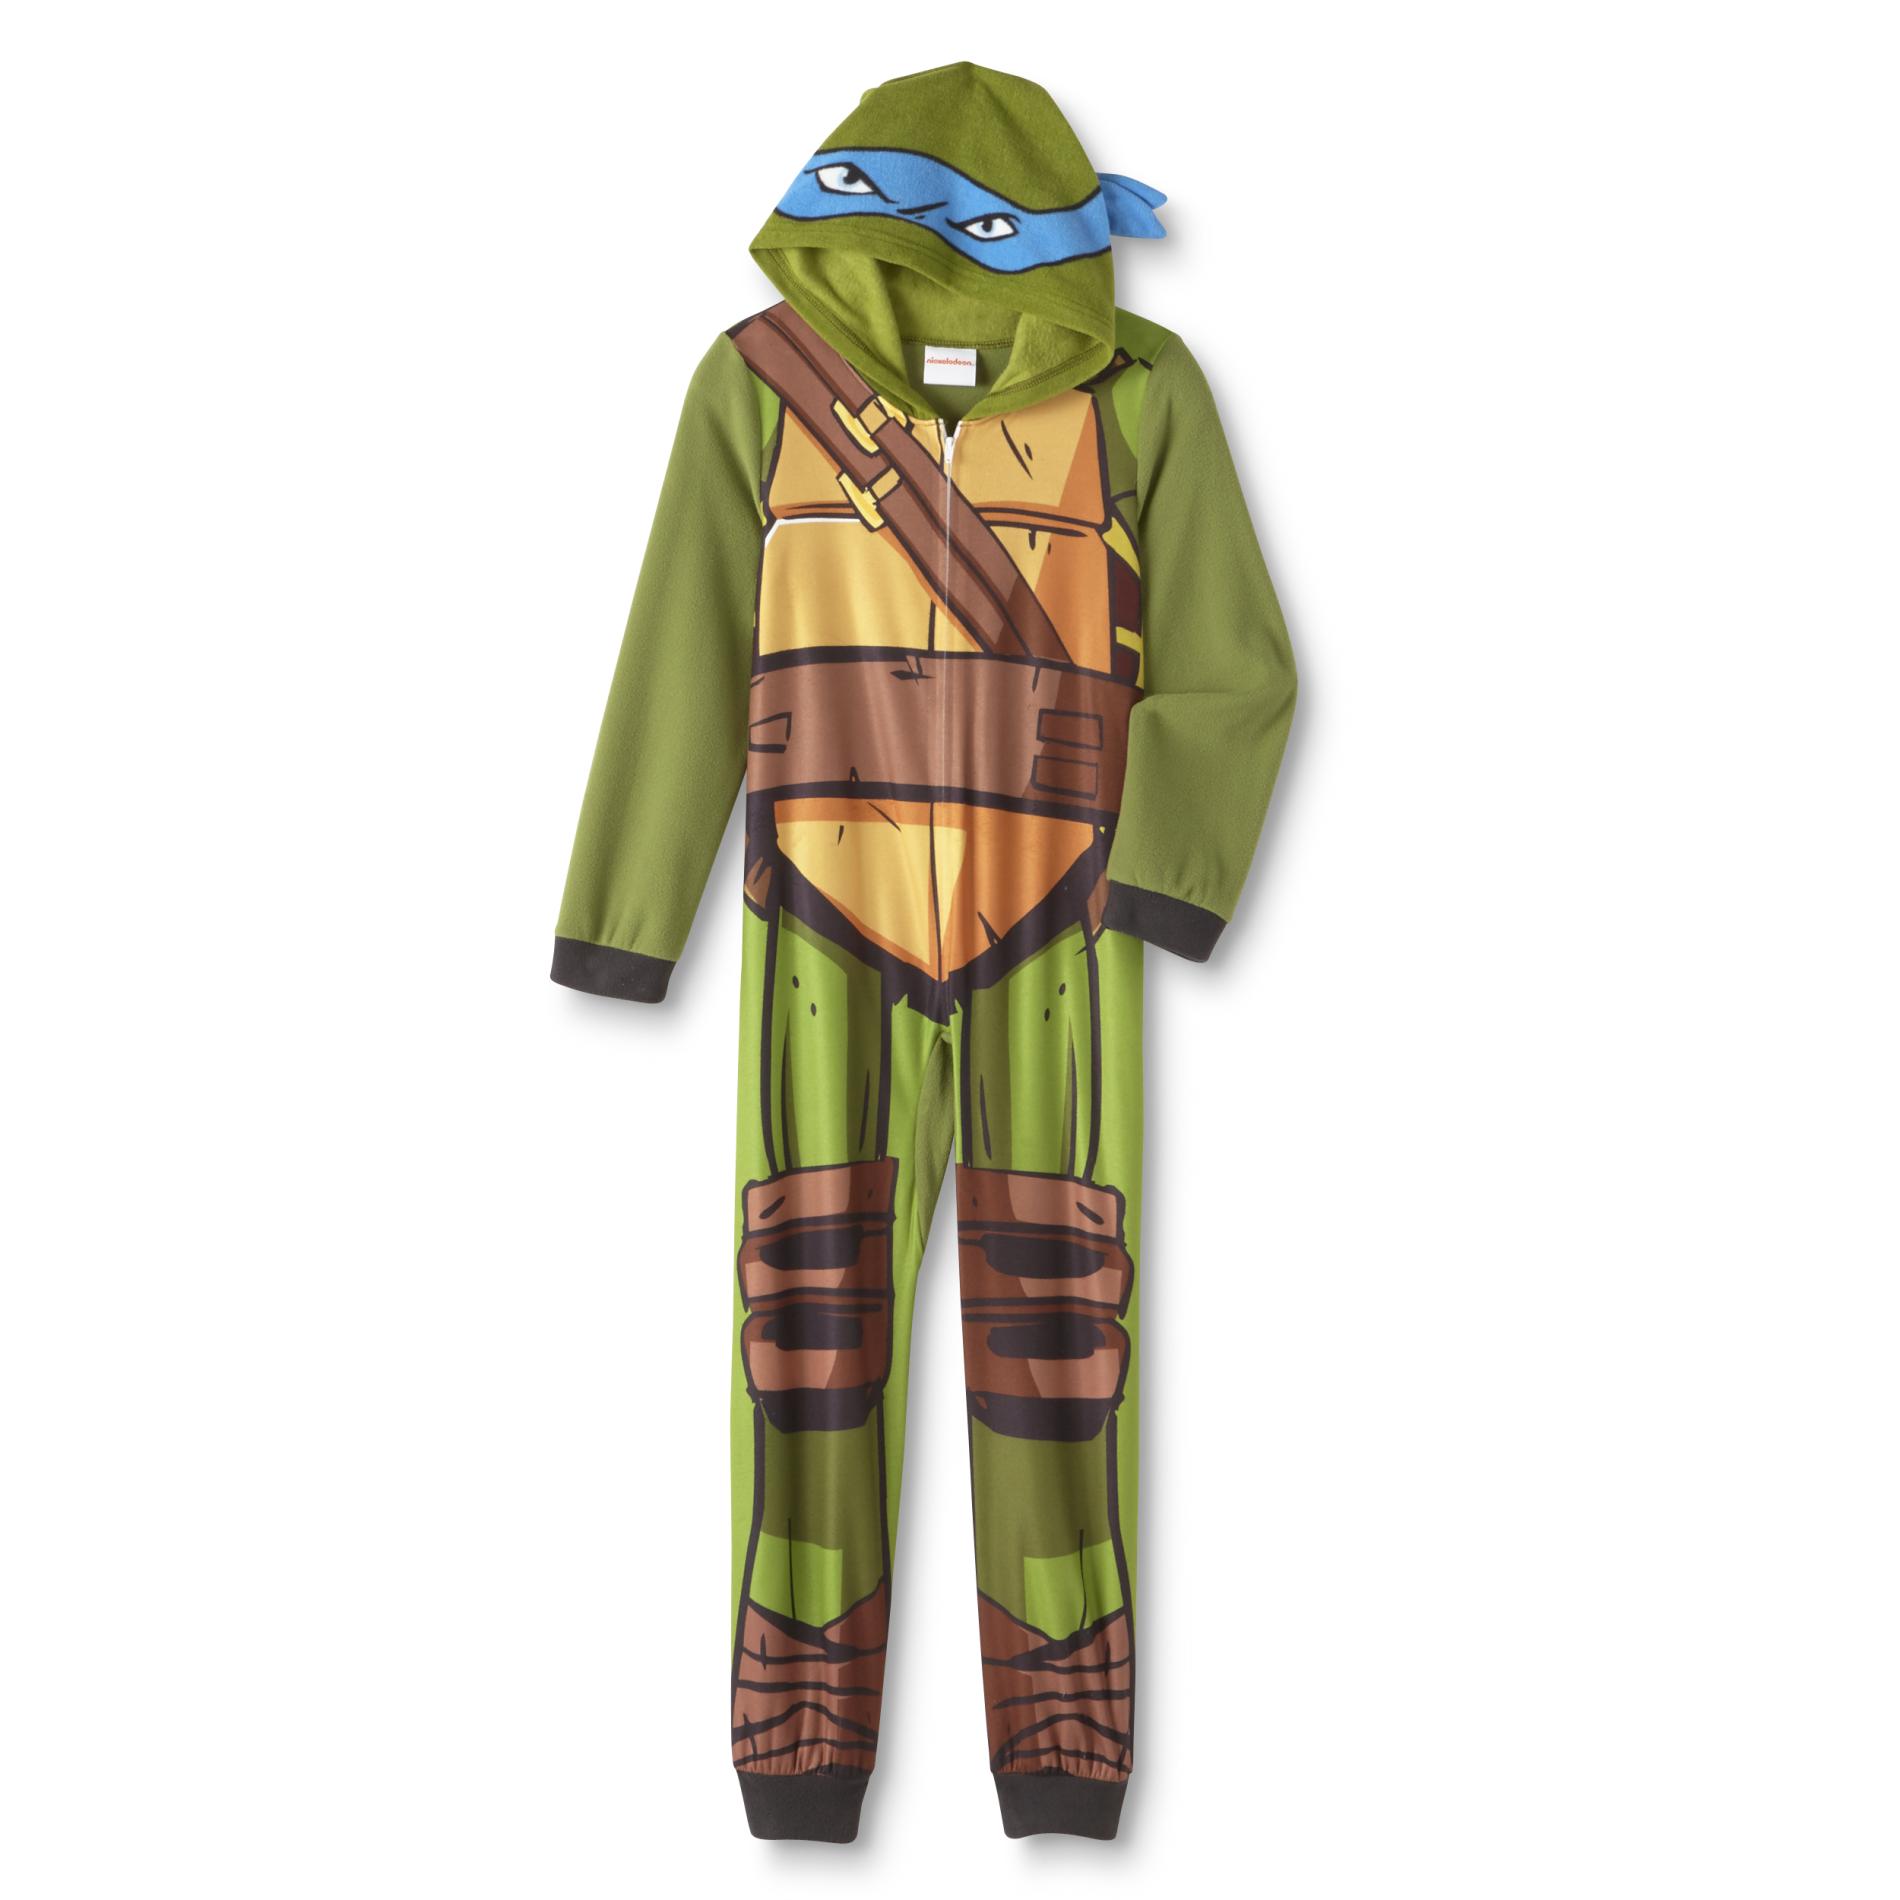 Nickelodeon Teenage Mutant Ninja Turtles Boy's One-Piece Hooded Pajamas